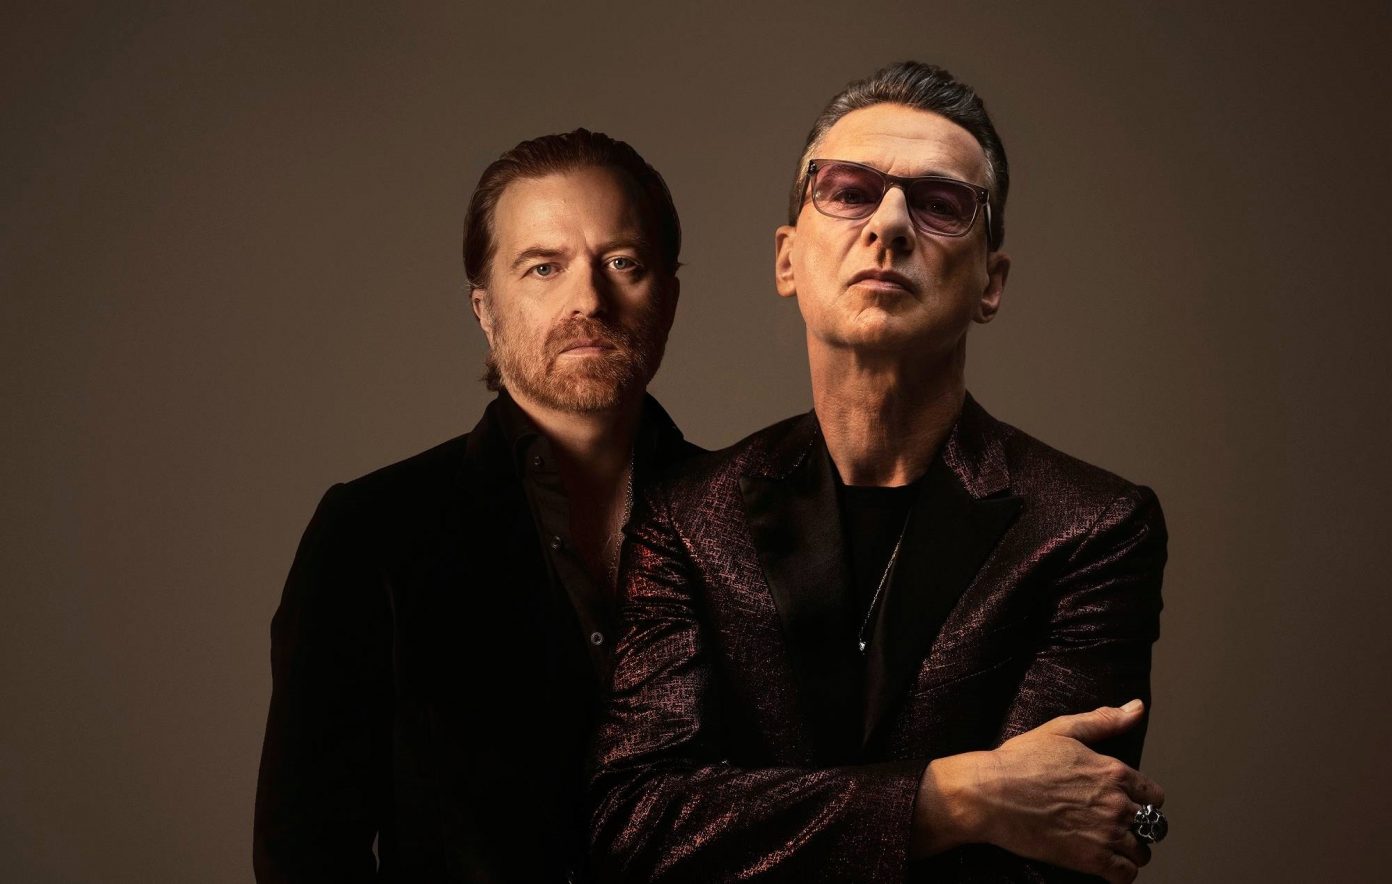 Depeche Mode's Dave Gahan announces London show of new album Imposter